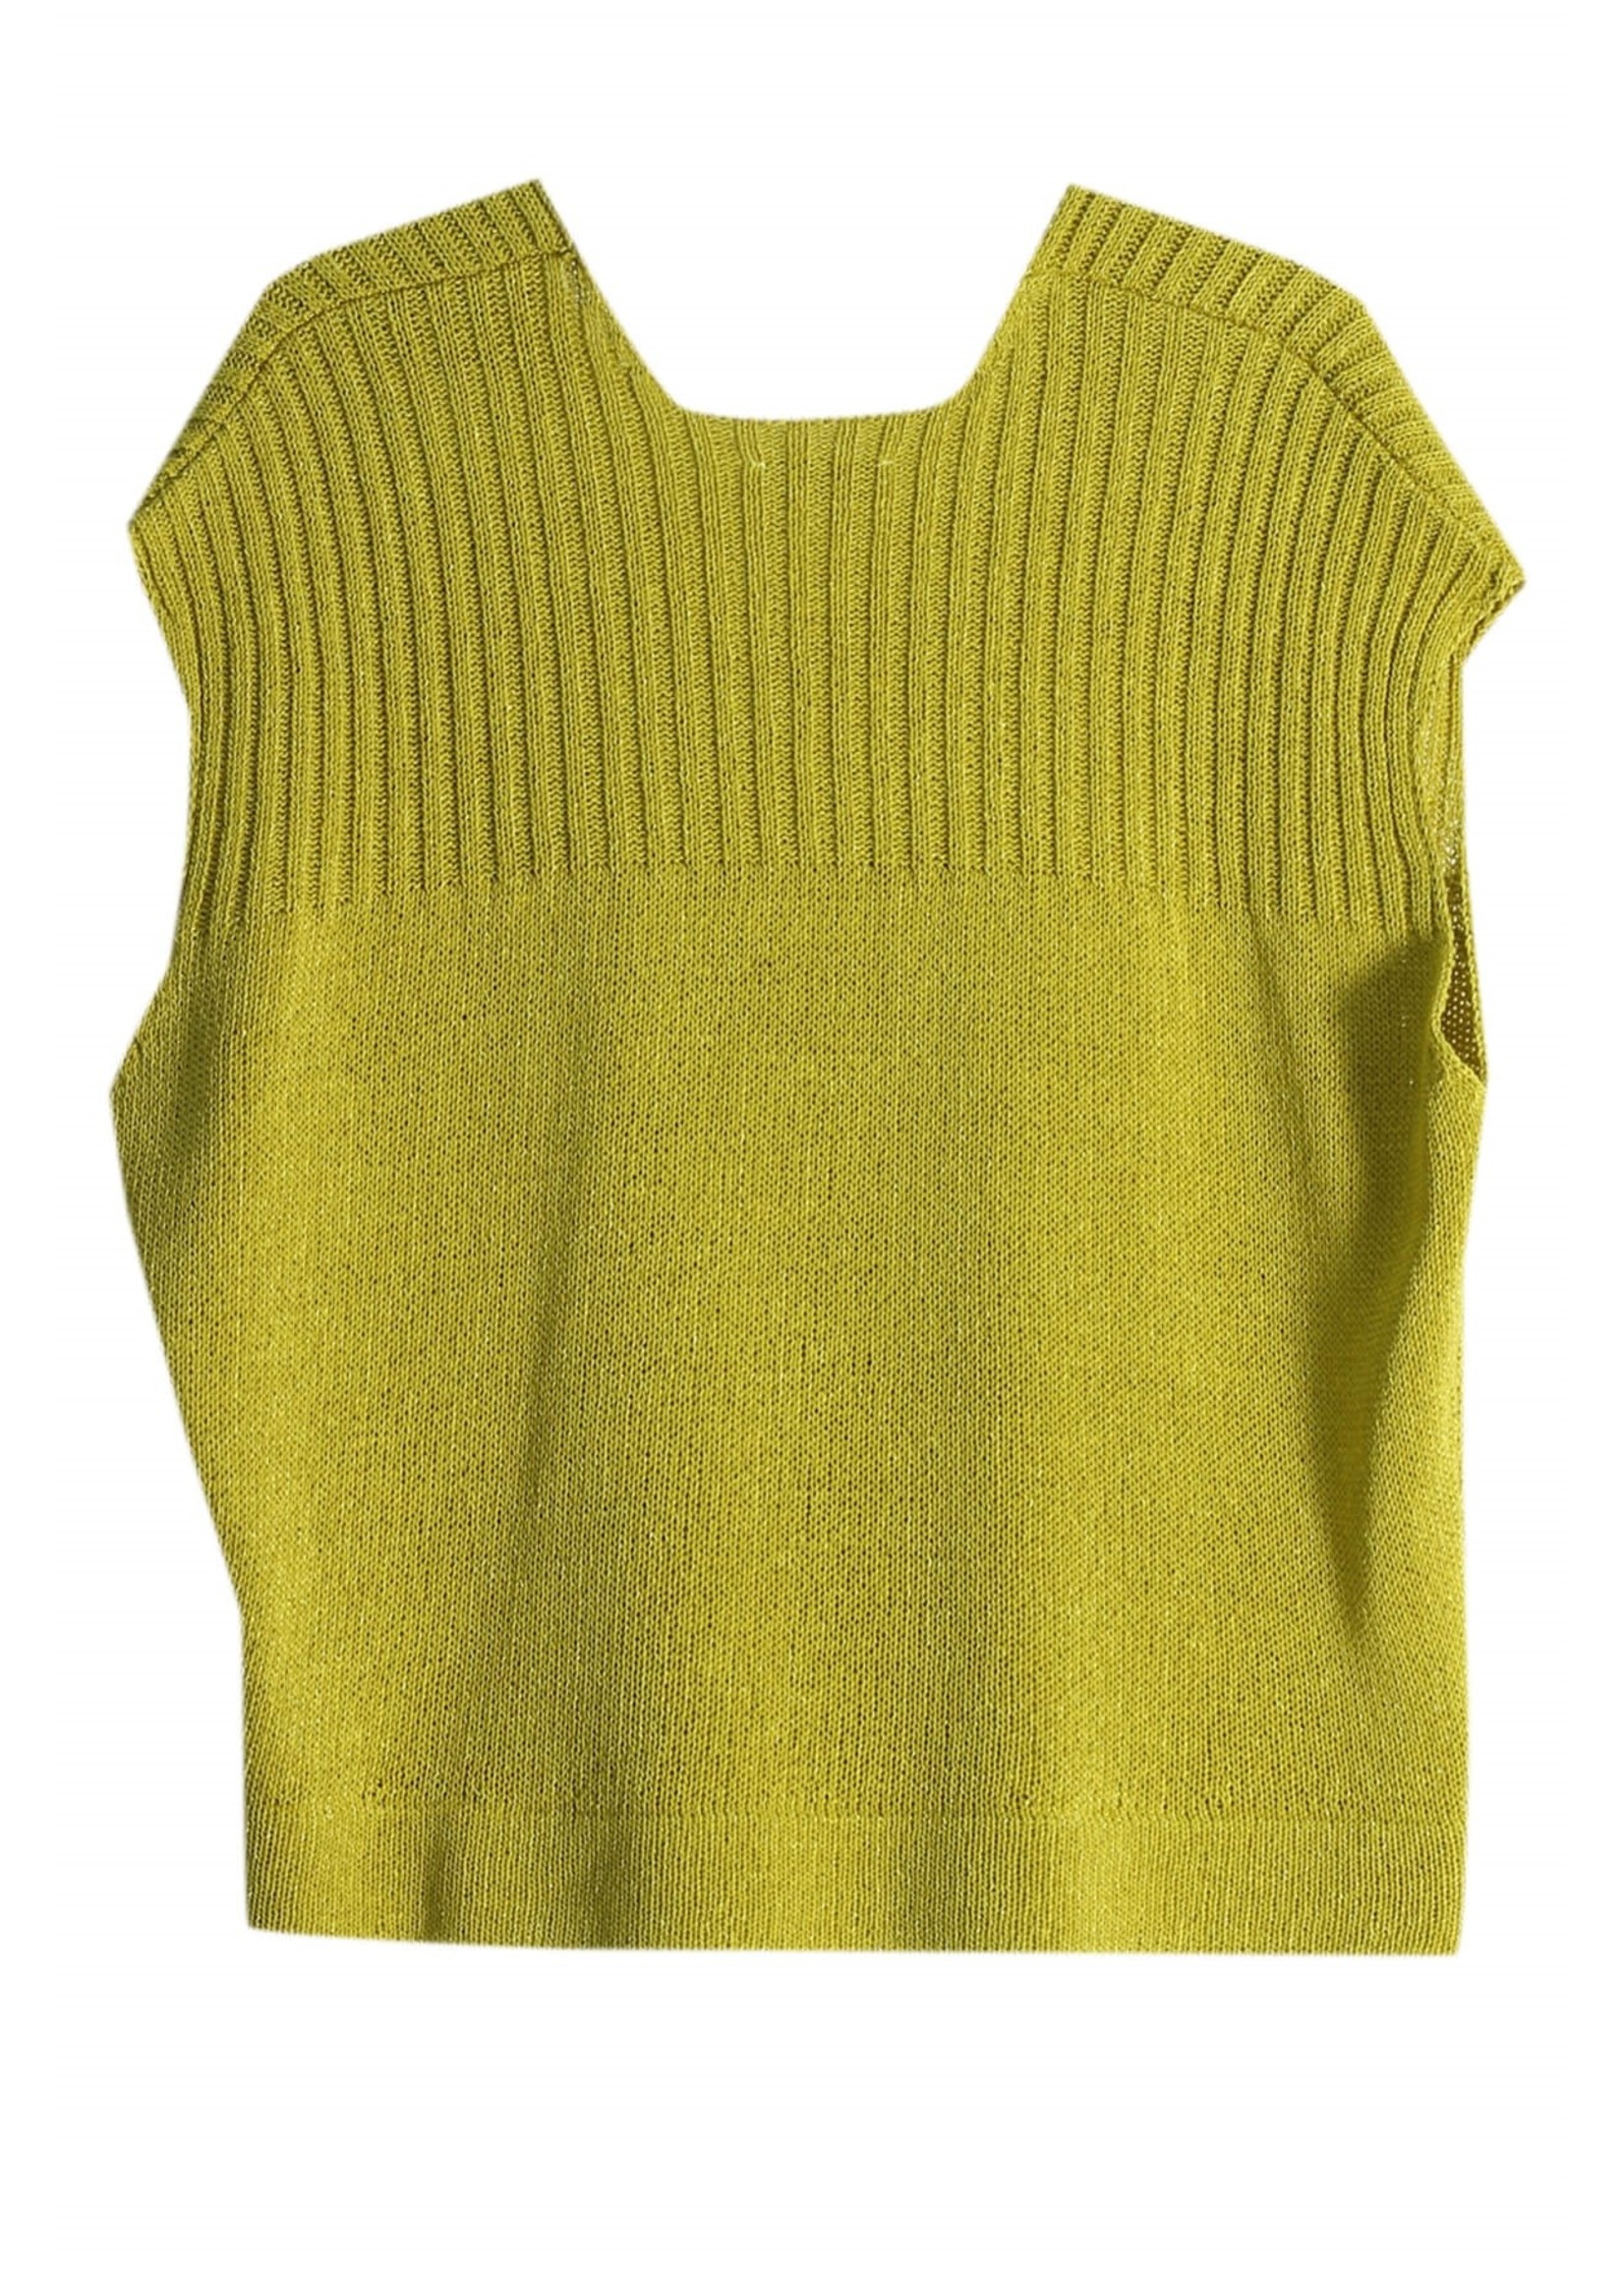 SYBIL b5617 yellow knit top